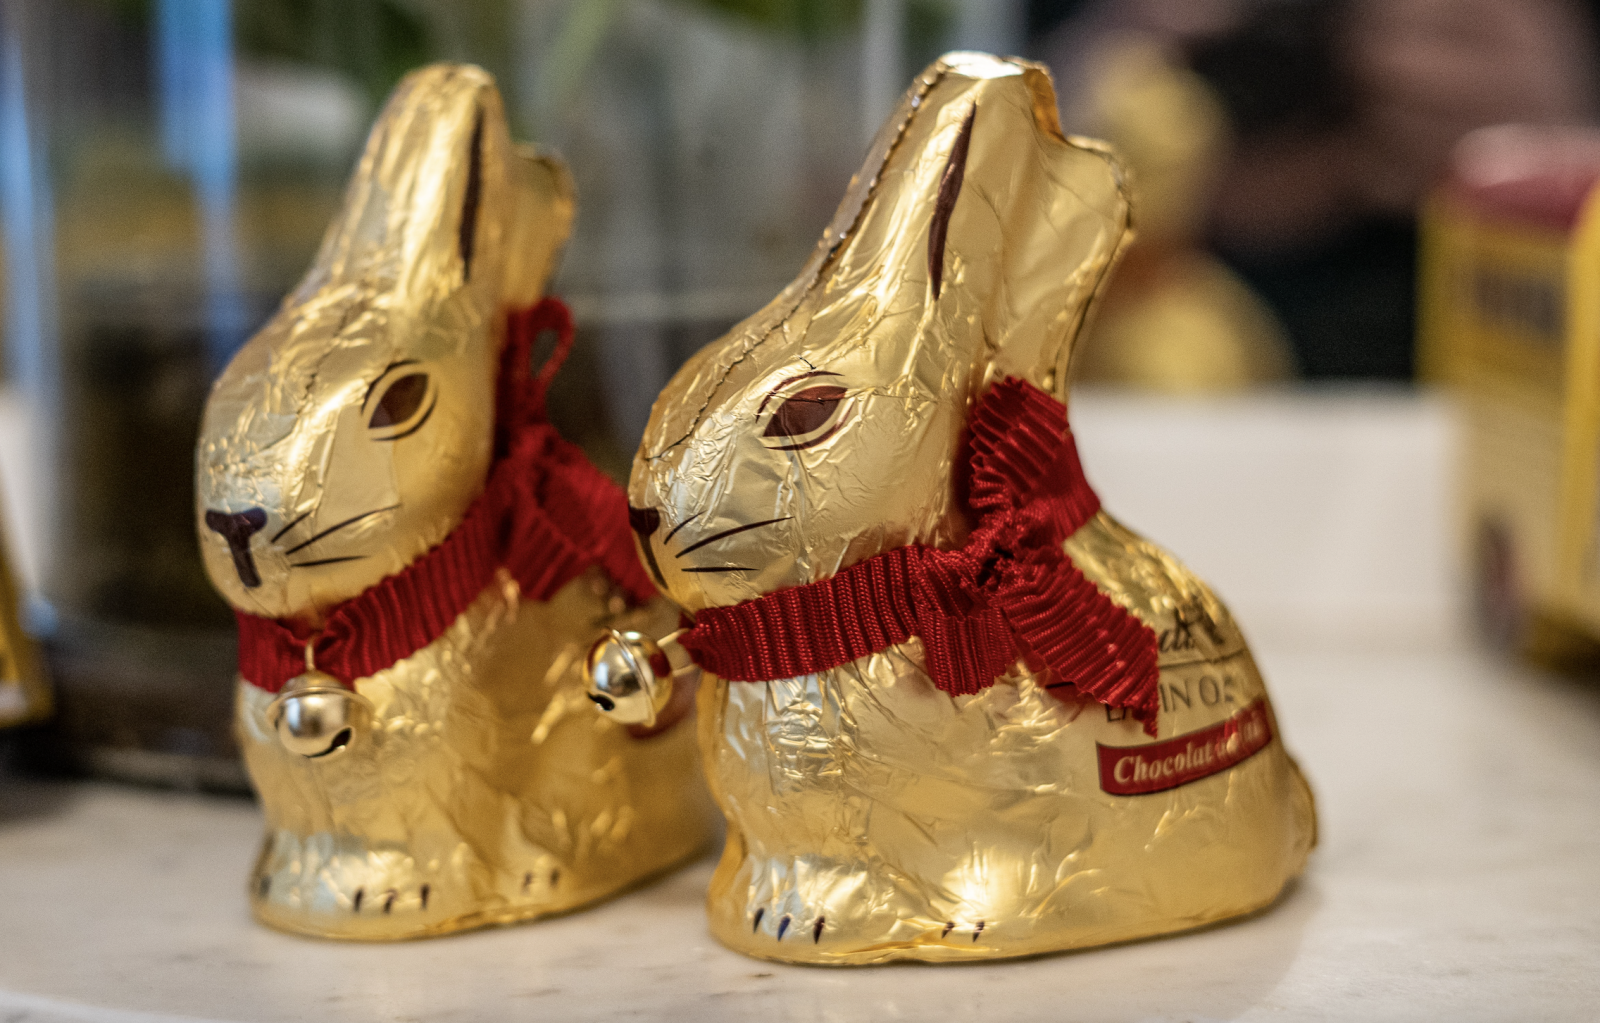 Lindt's chocolate bunnies